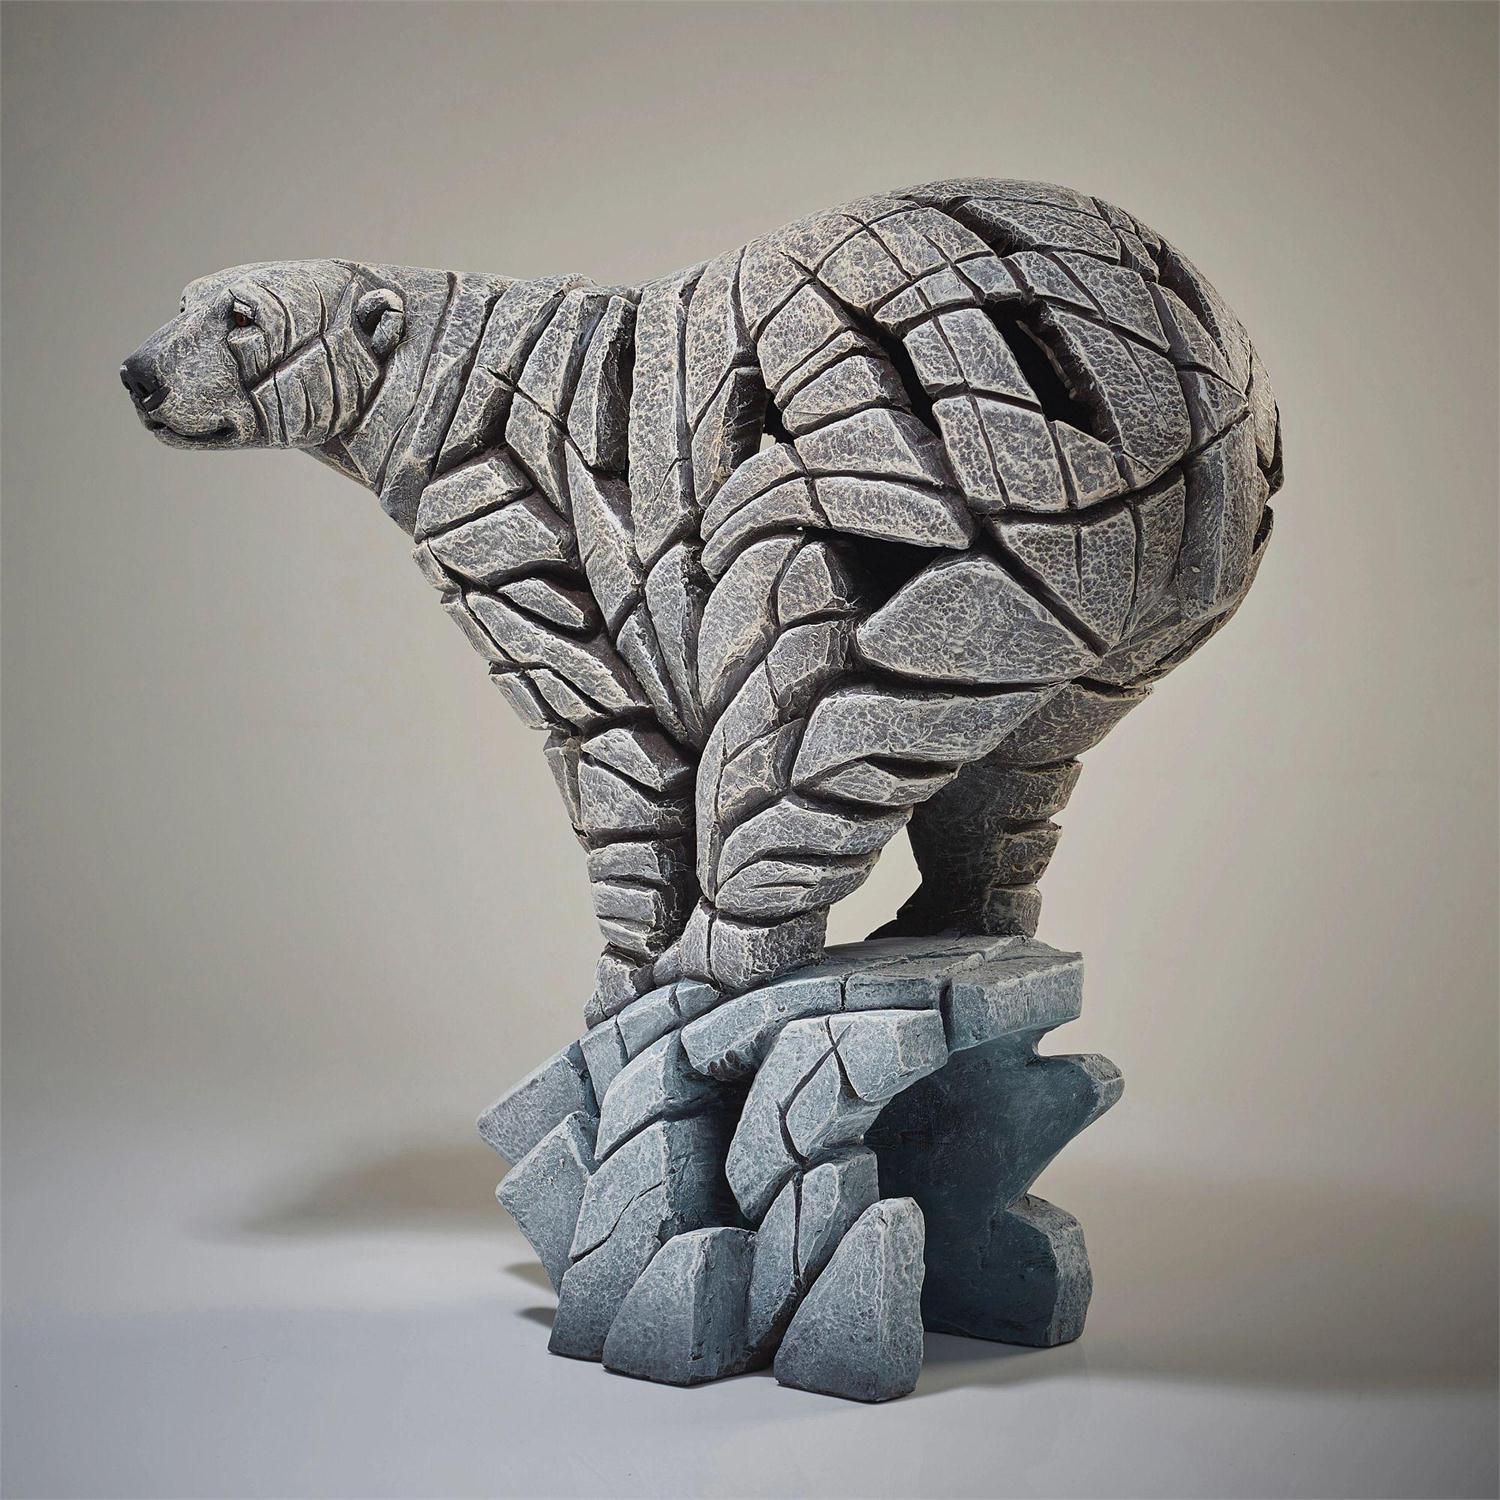 Enesco Gifts Matt Buckley The Edge Sculpture Polar Bear Figurine Free Shipping Iveys Gifts And Decor